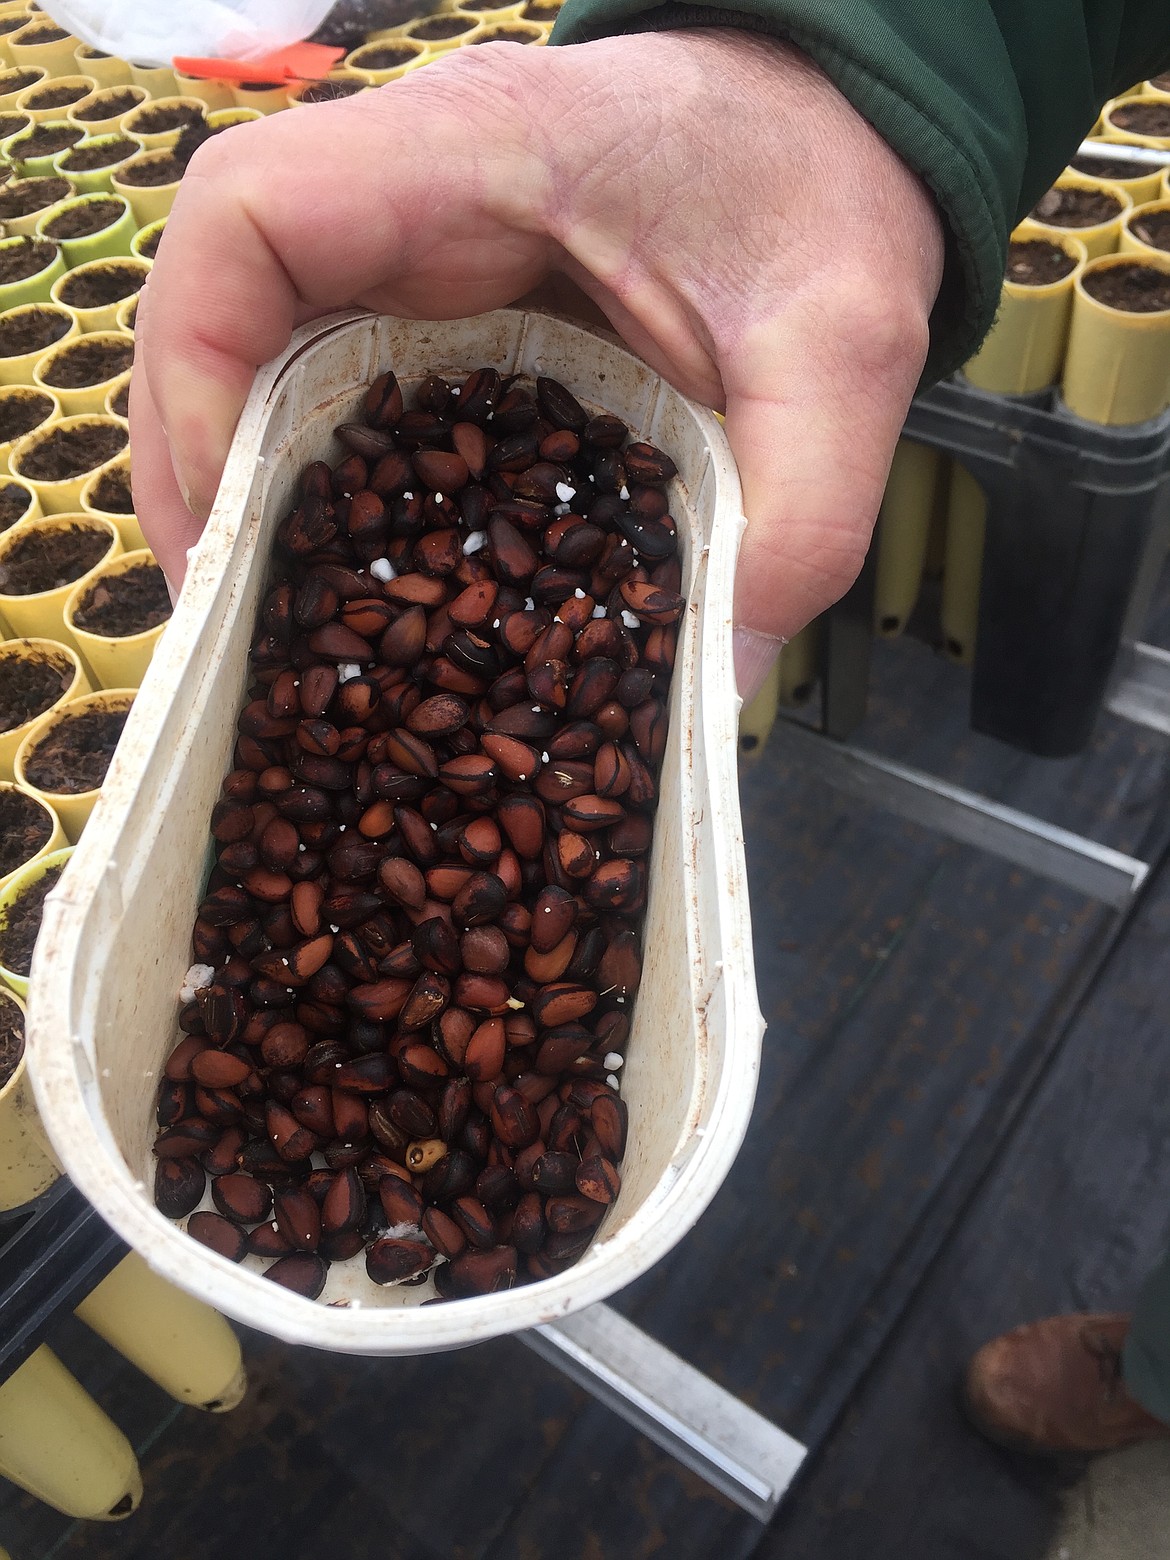 Aram Eramian holds a carton of whitebark pine seeds. The seeds require 120 days to germinate. (JENNIFER PASSARO/Press)